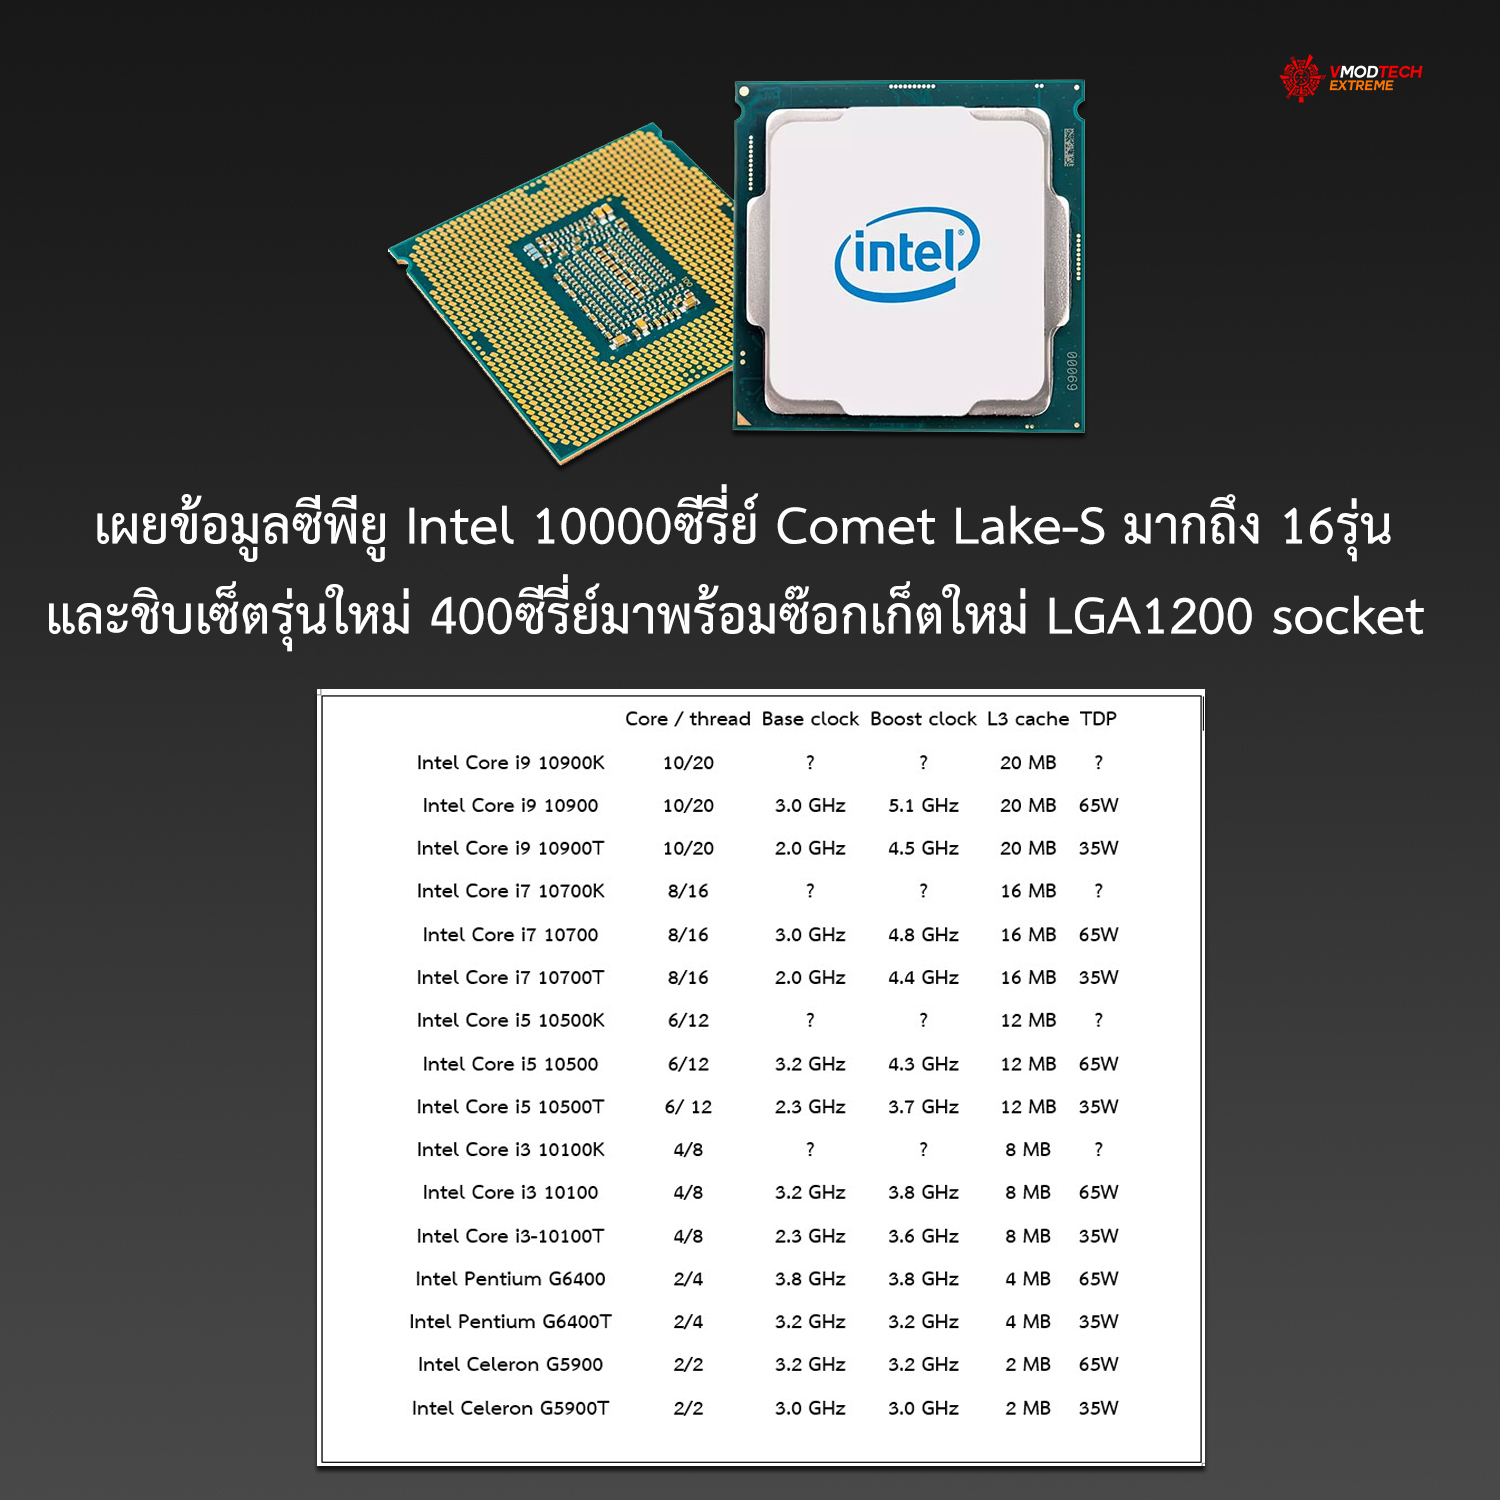 intel 10000series comet lake s lga1200 socket เผยข้อมูลซีพียู Intel 10000ซีรี่ย์ Comet Lake S มาถึง 16รุ่นและชิบเซ็ตรุ่นใหม่ 400ซีรี่ย์มาพร้อมซ๊อกเก็ตใหม่ LGA1200 socket 